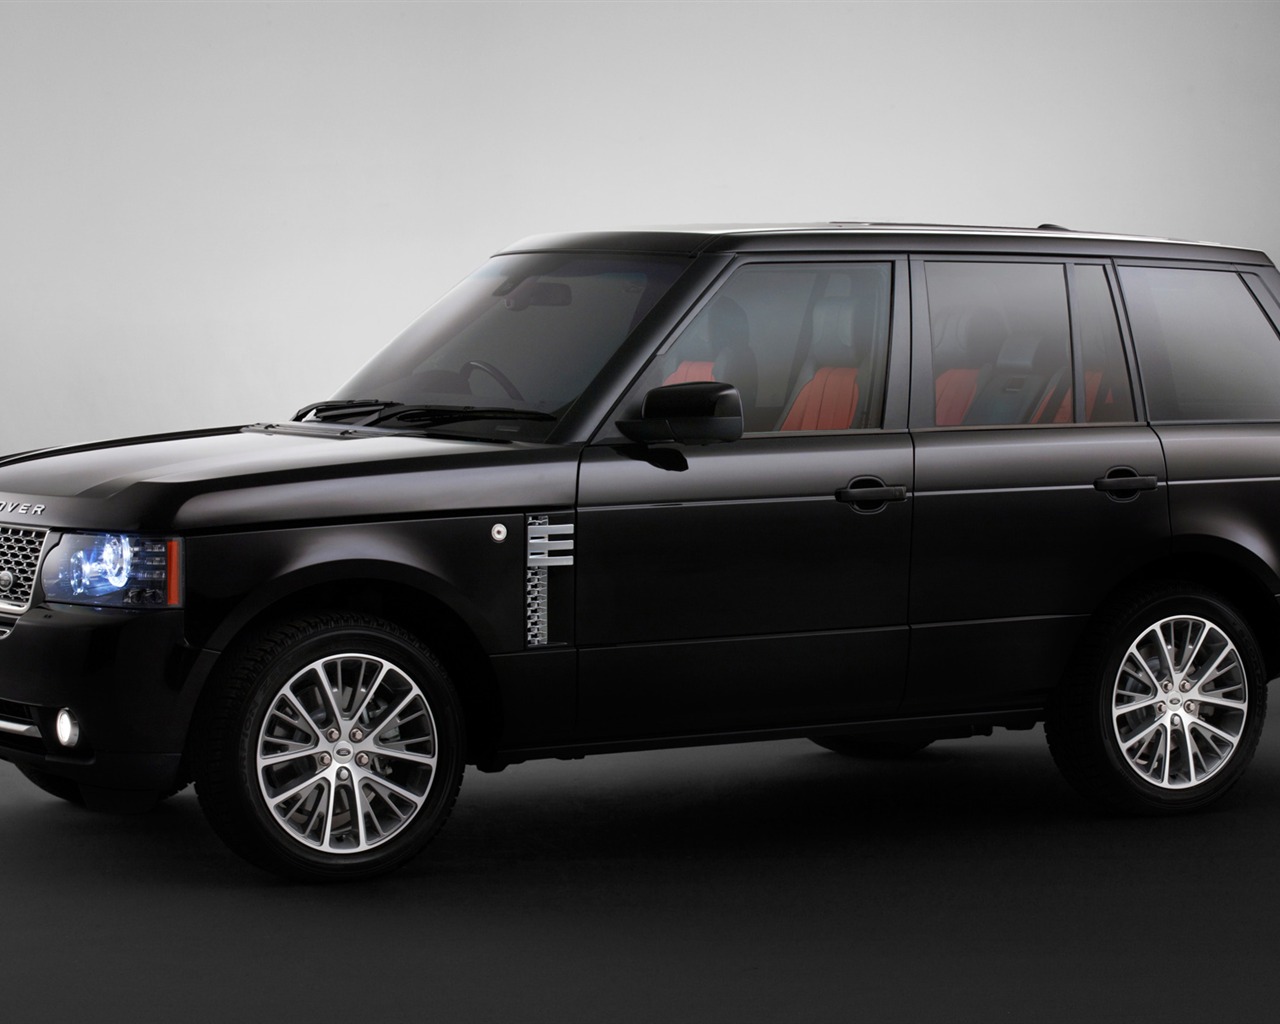 Land Rover Range Rover Black Edition - 2011 路虎17 - 1280x1024